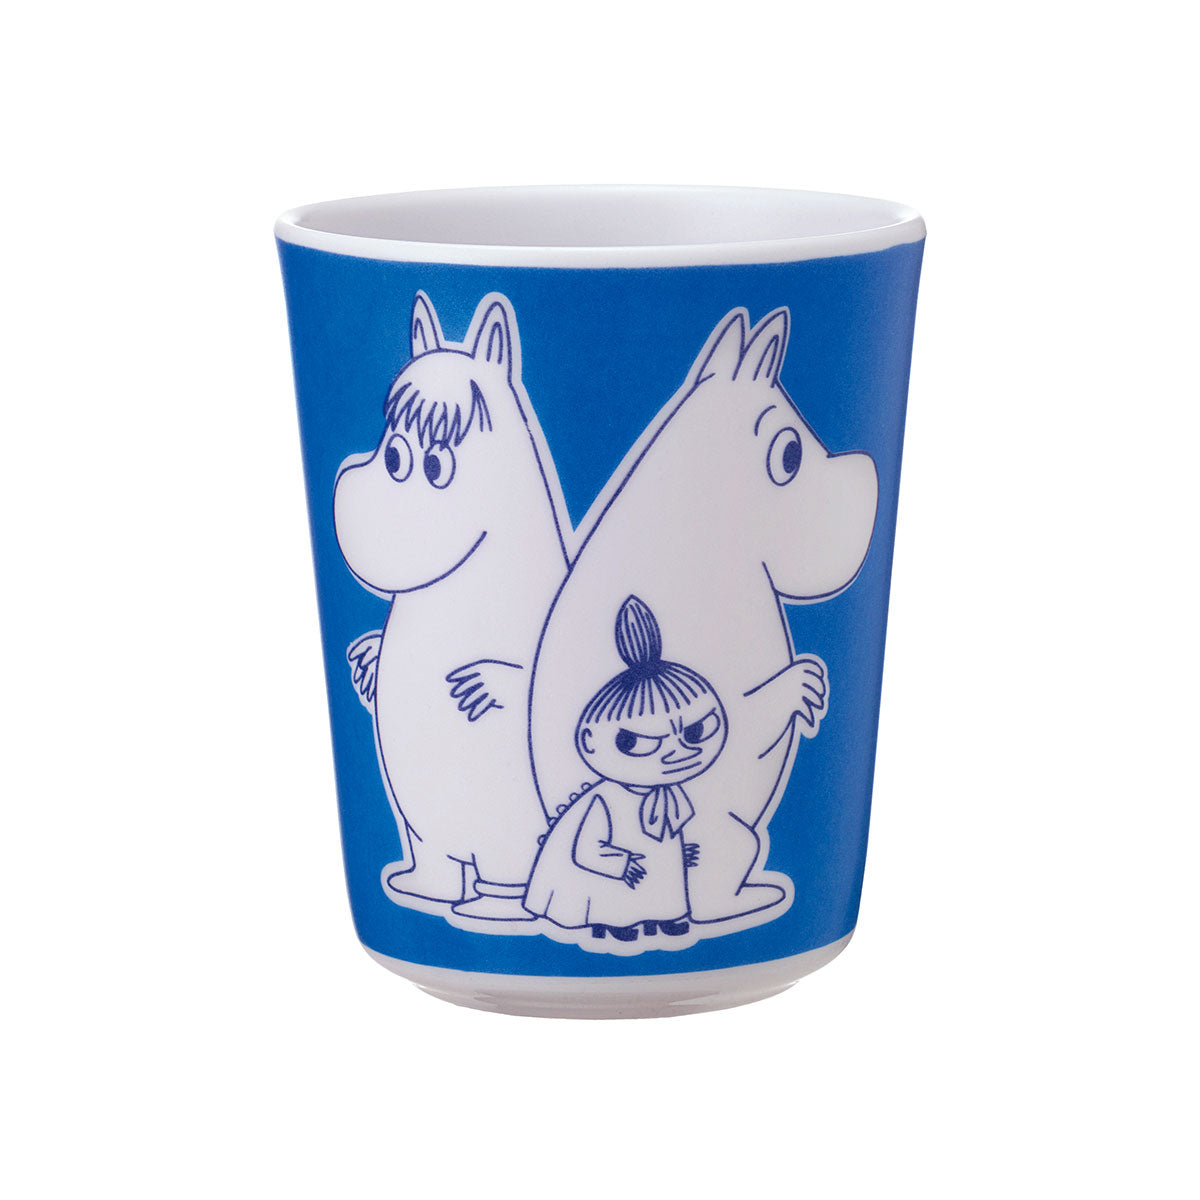 Moomin ムーミン petit jour paris プティジュールパリ メラミンカップ ( ムーミン )